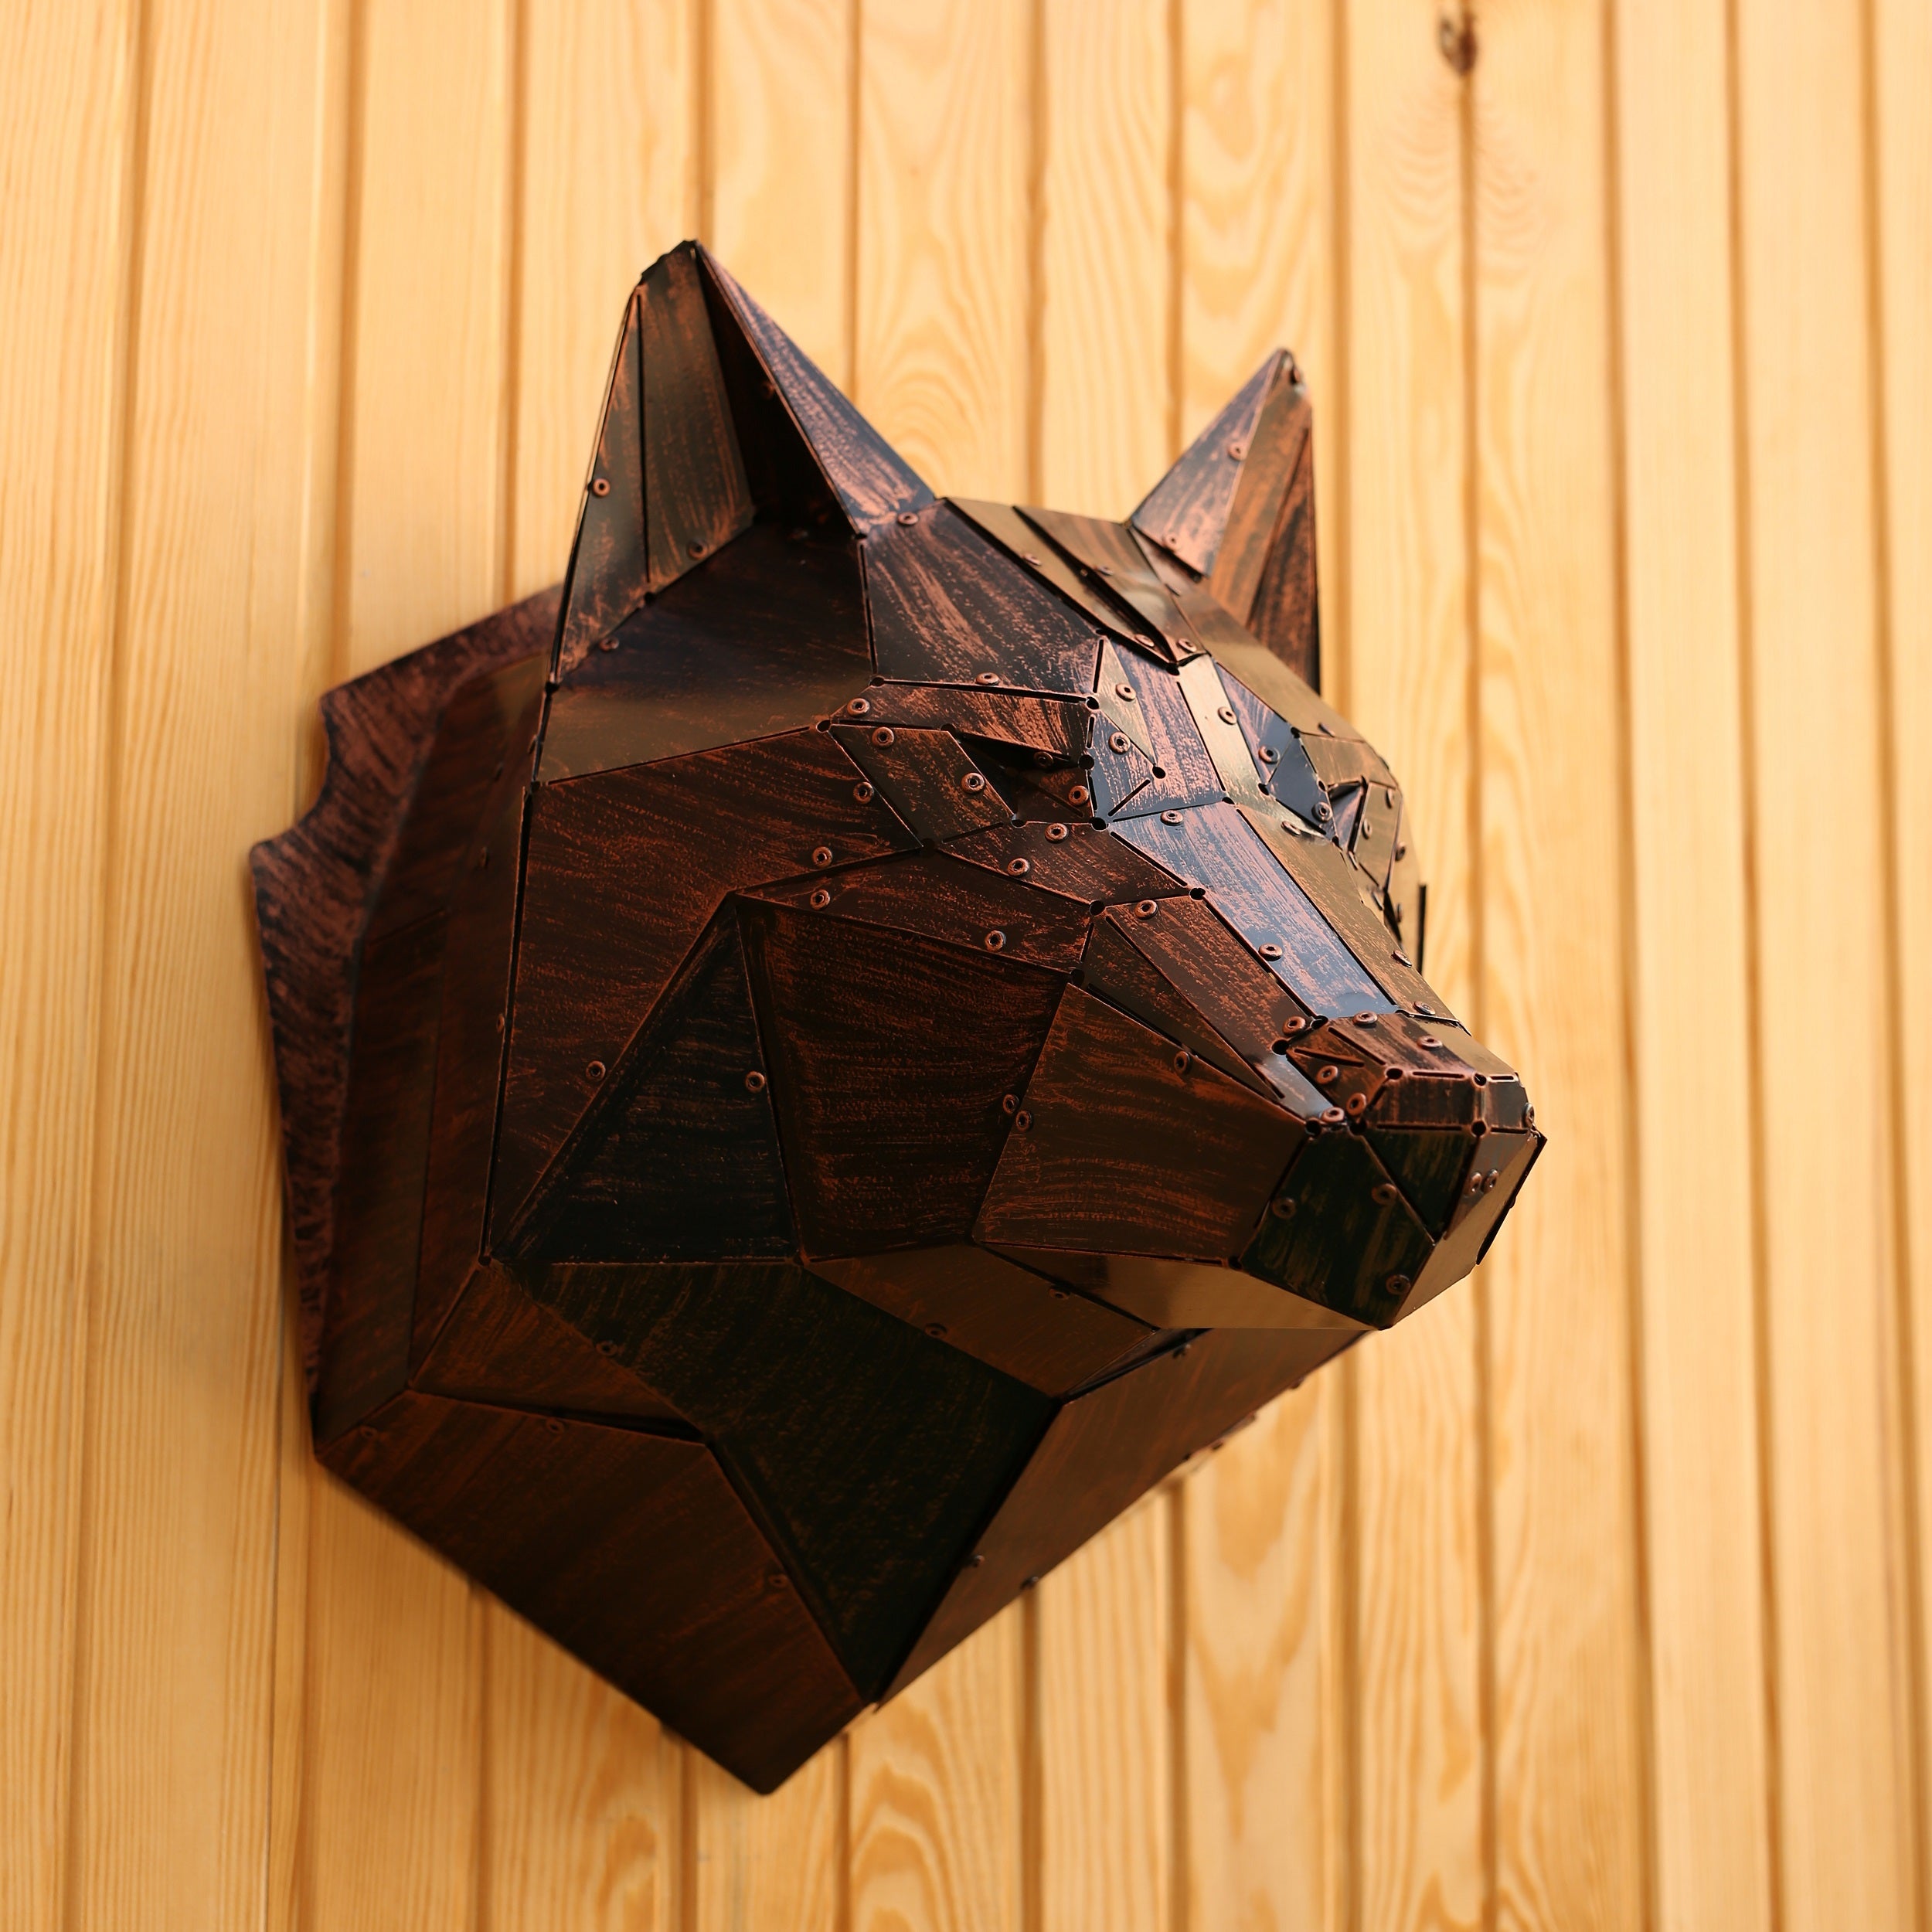 3D Geometric Wall Art of Wolf